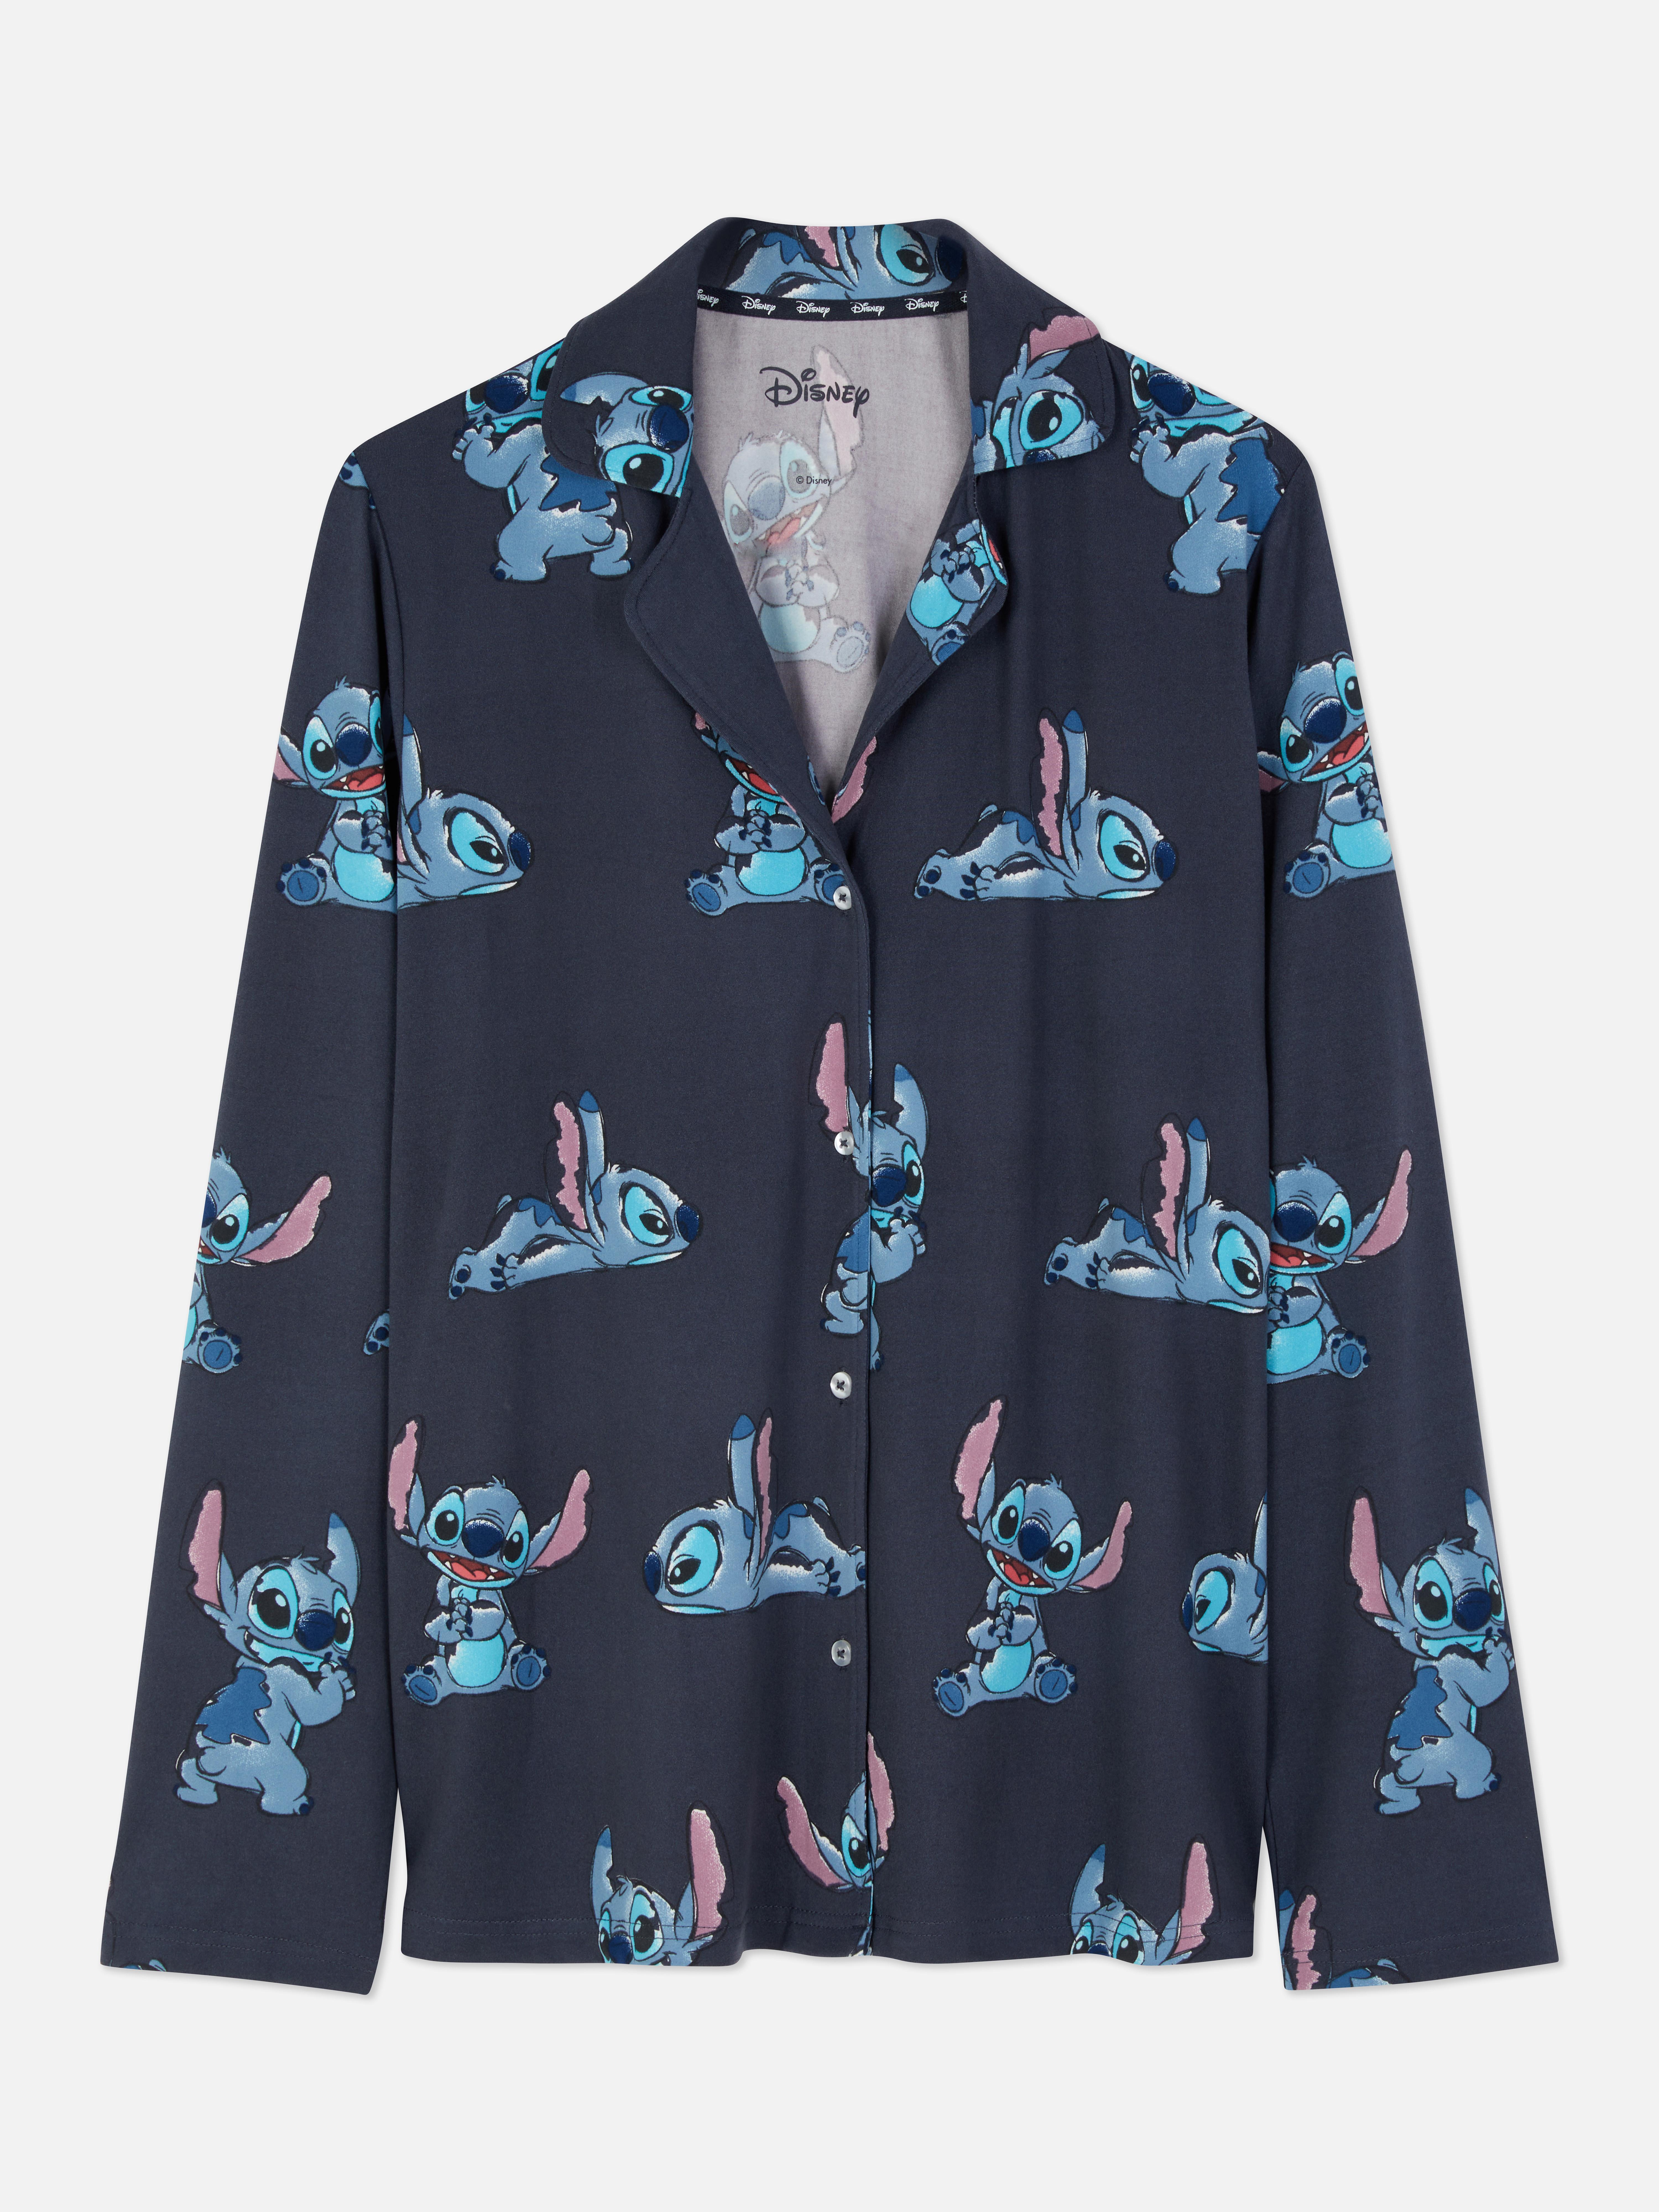 Disney's Lilo & Stitch Pyjama Shirt